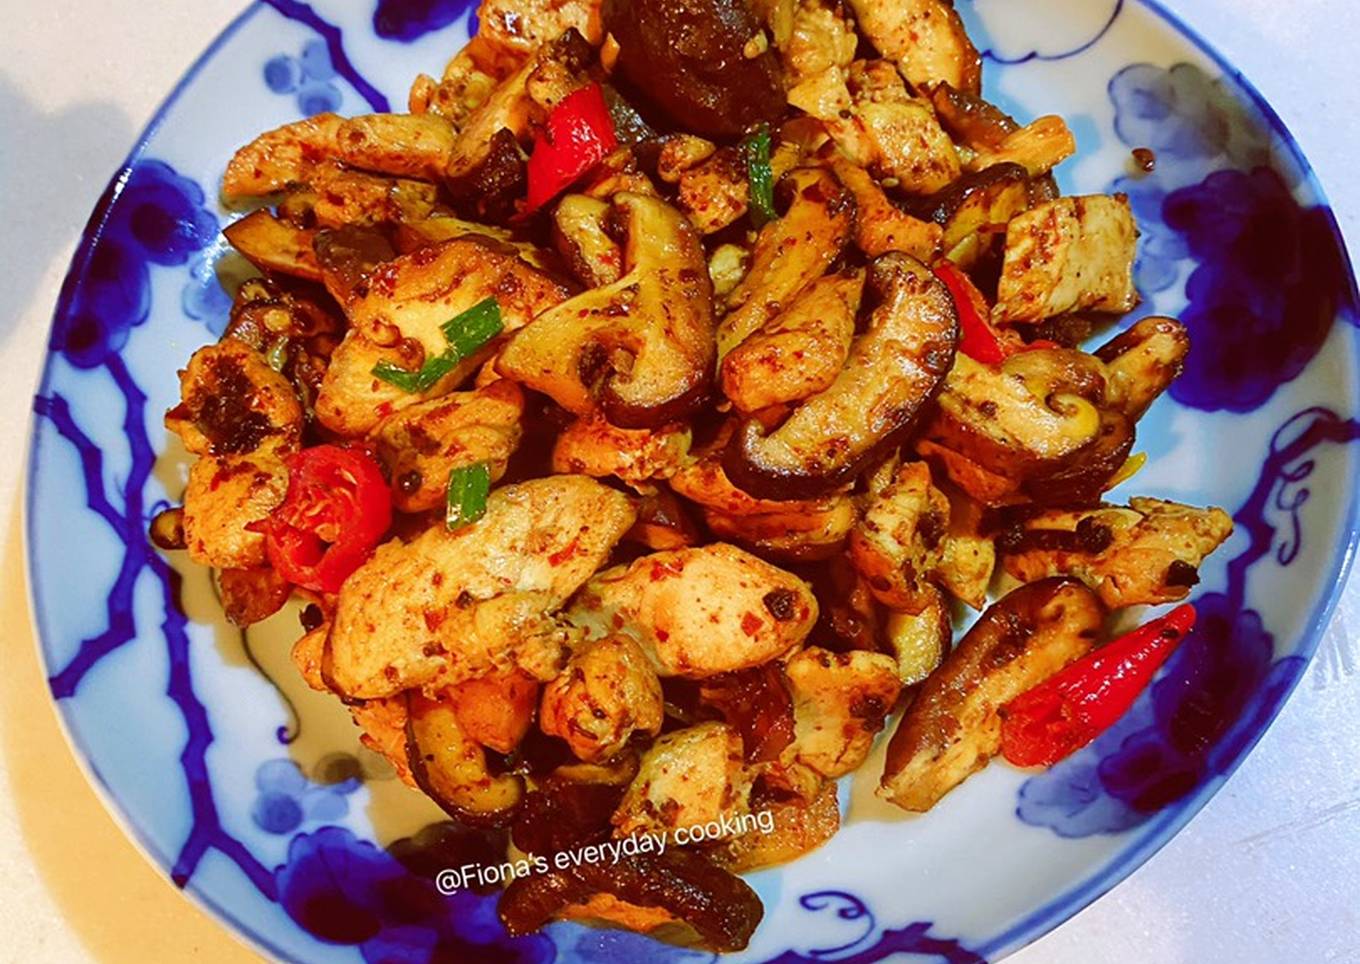 stir fried chicken breast with shiitake mushrooms